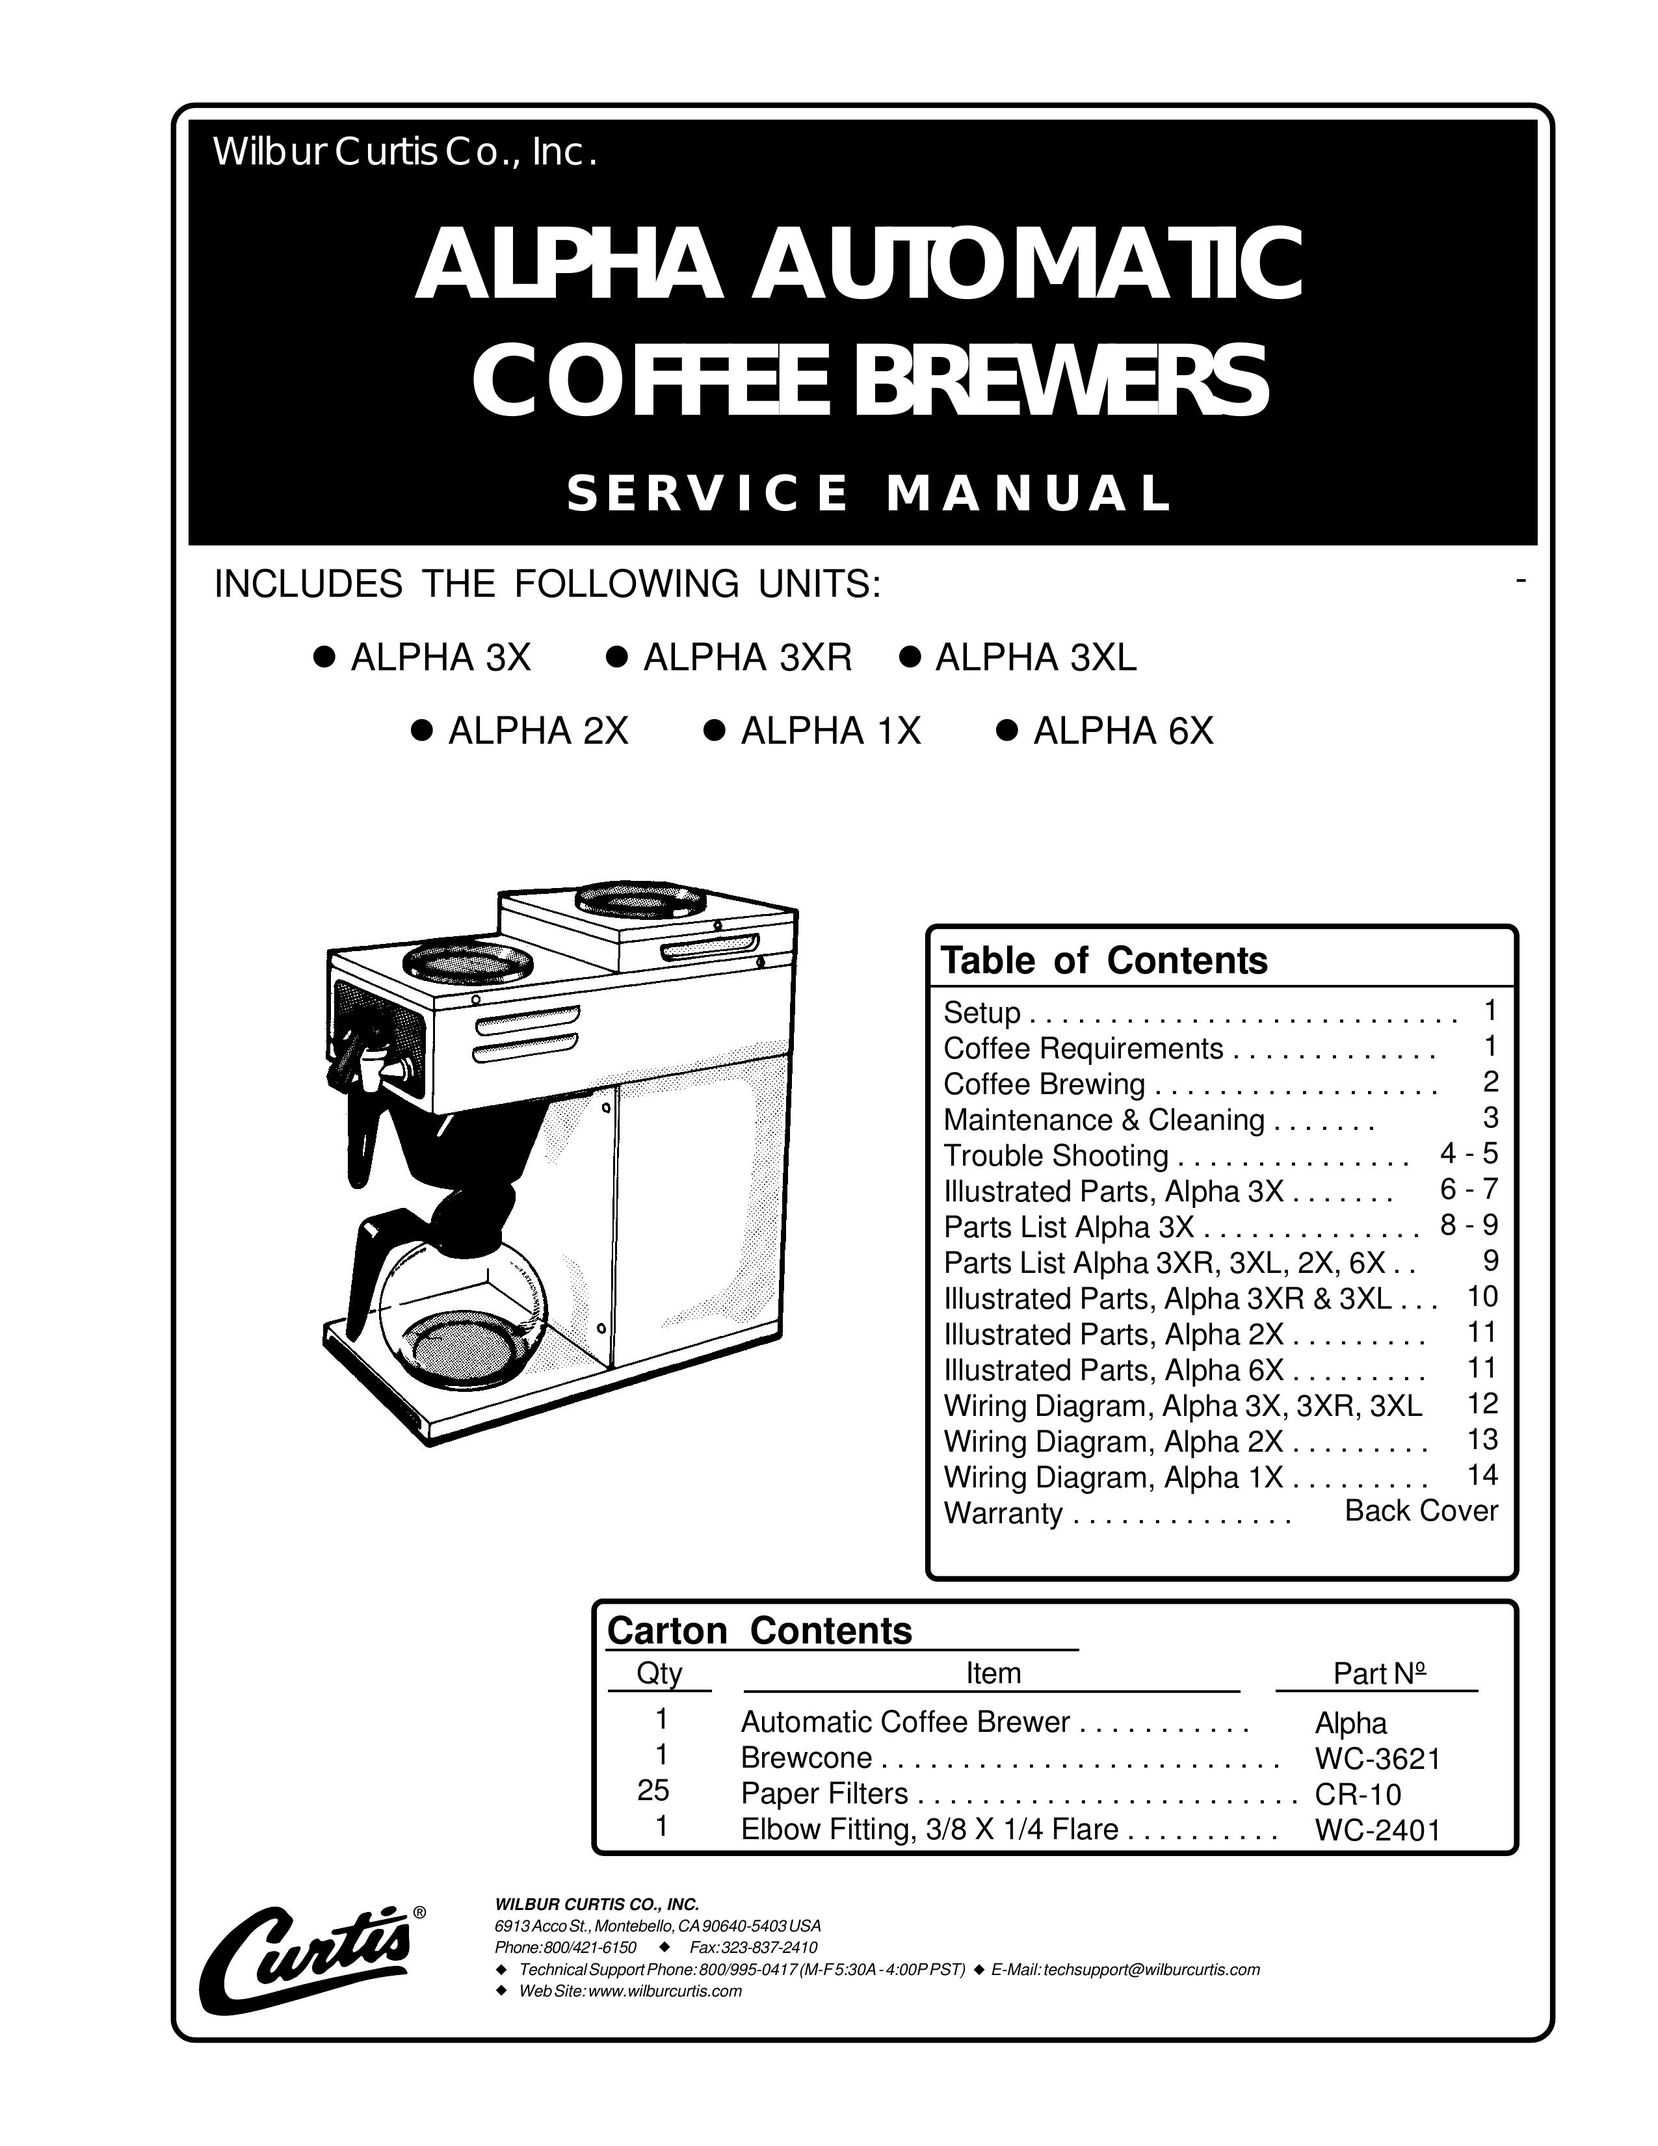 Wibur Curtis Company ALPHA 1X Coffeemaker User Manual